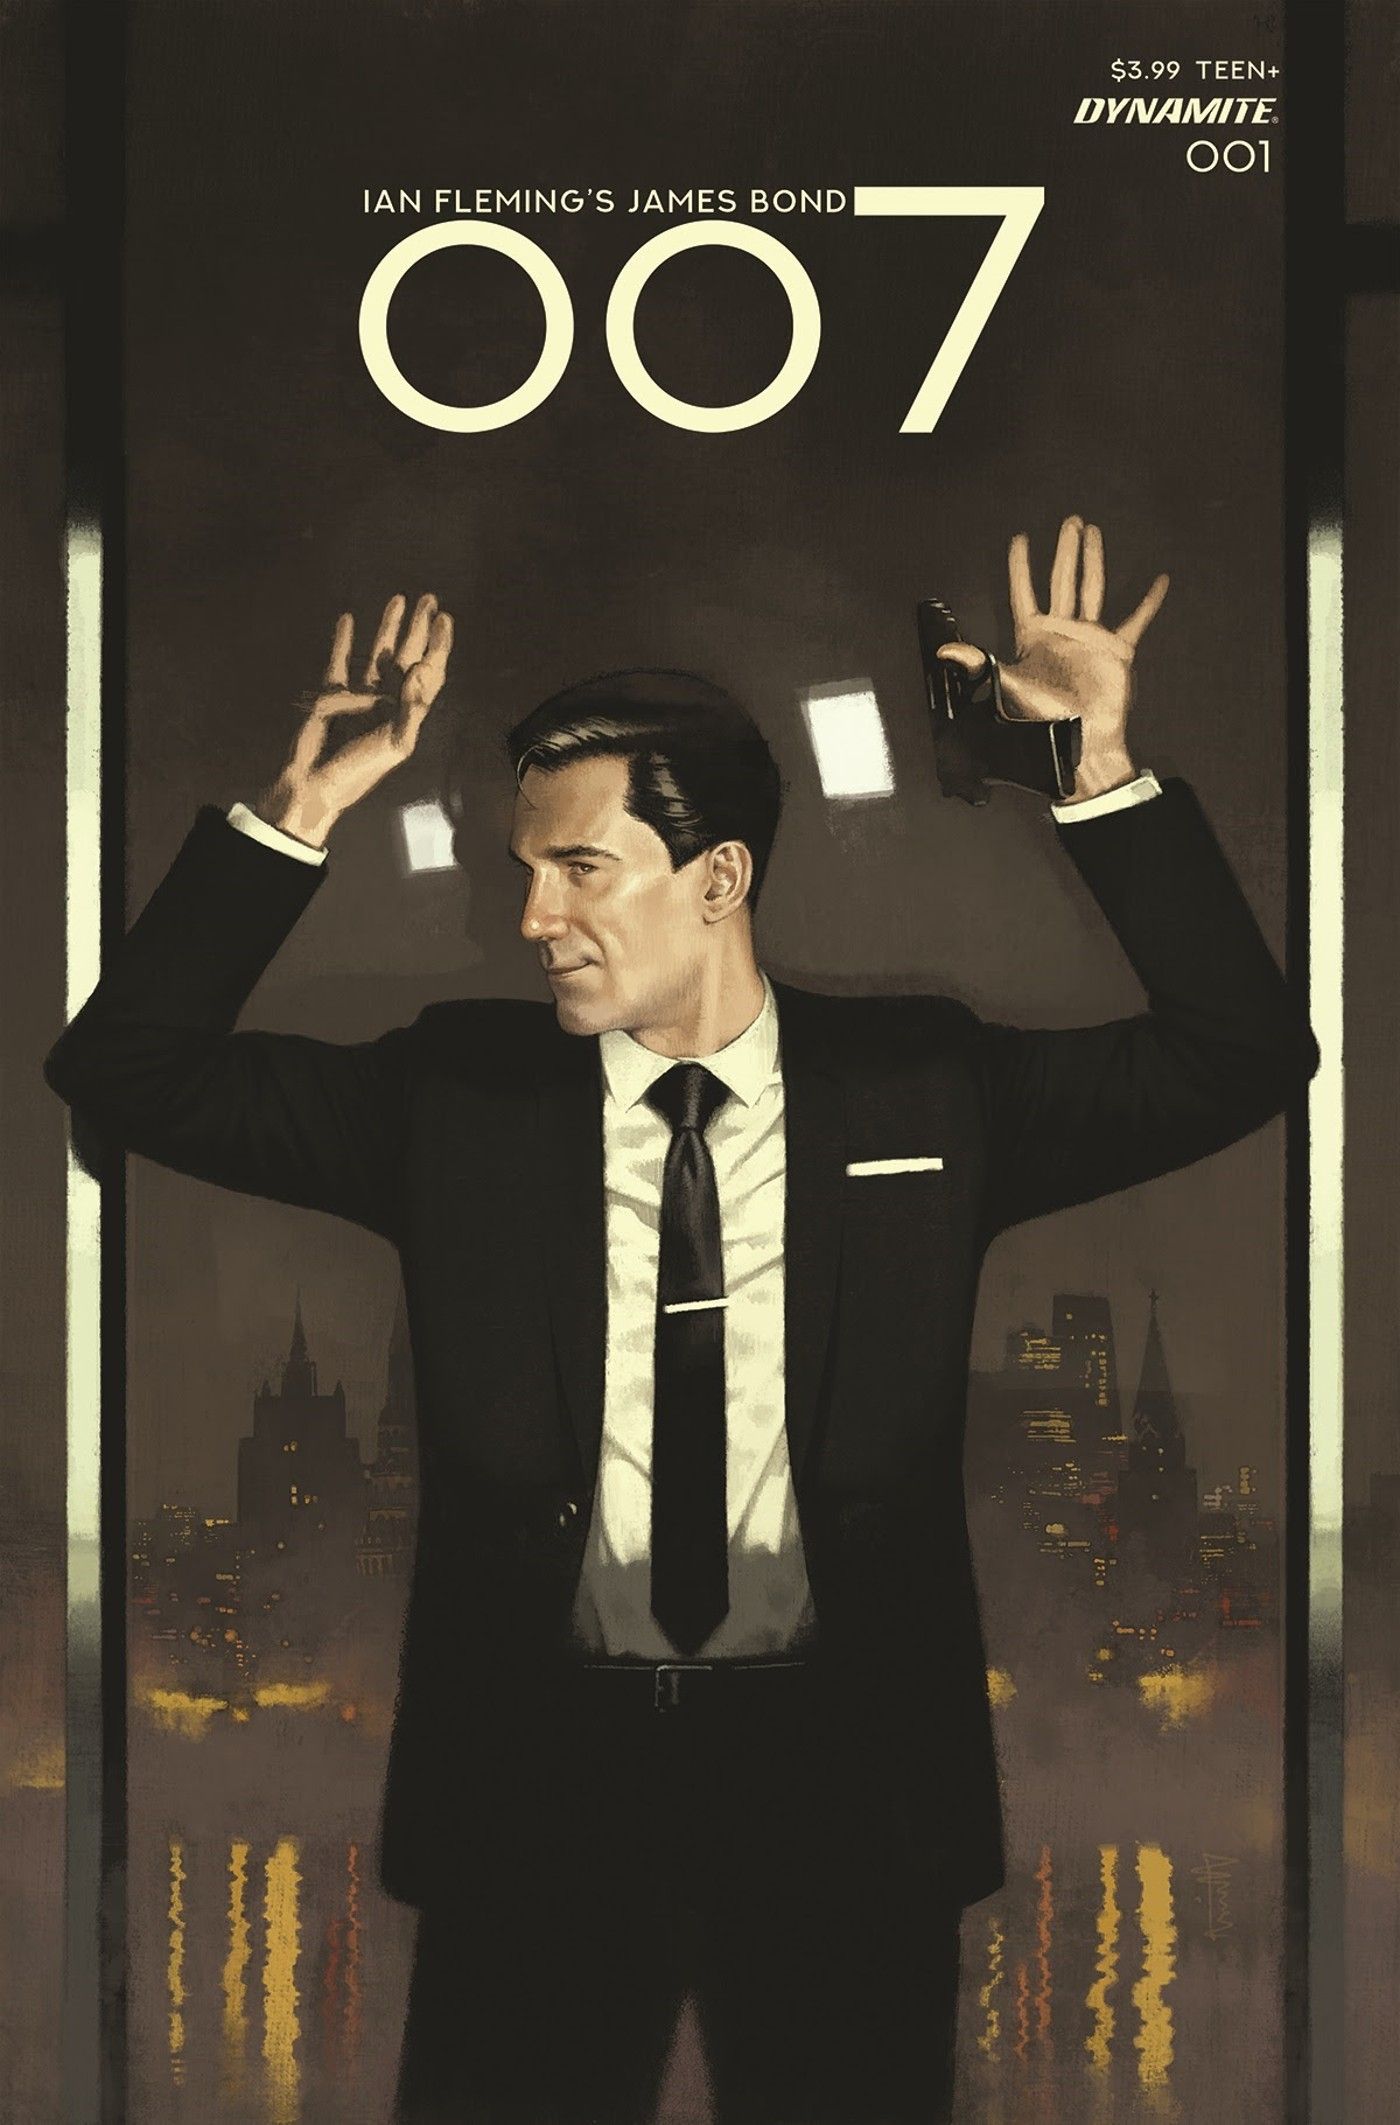 James Bond's New Adventure Puts Focus On Espionage & Spycraft